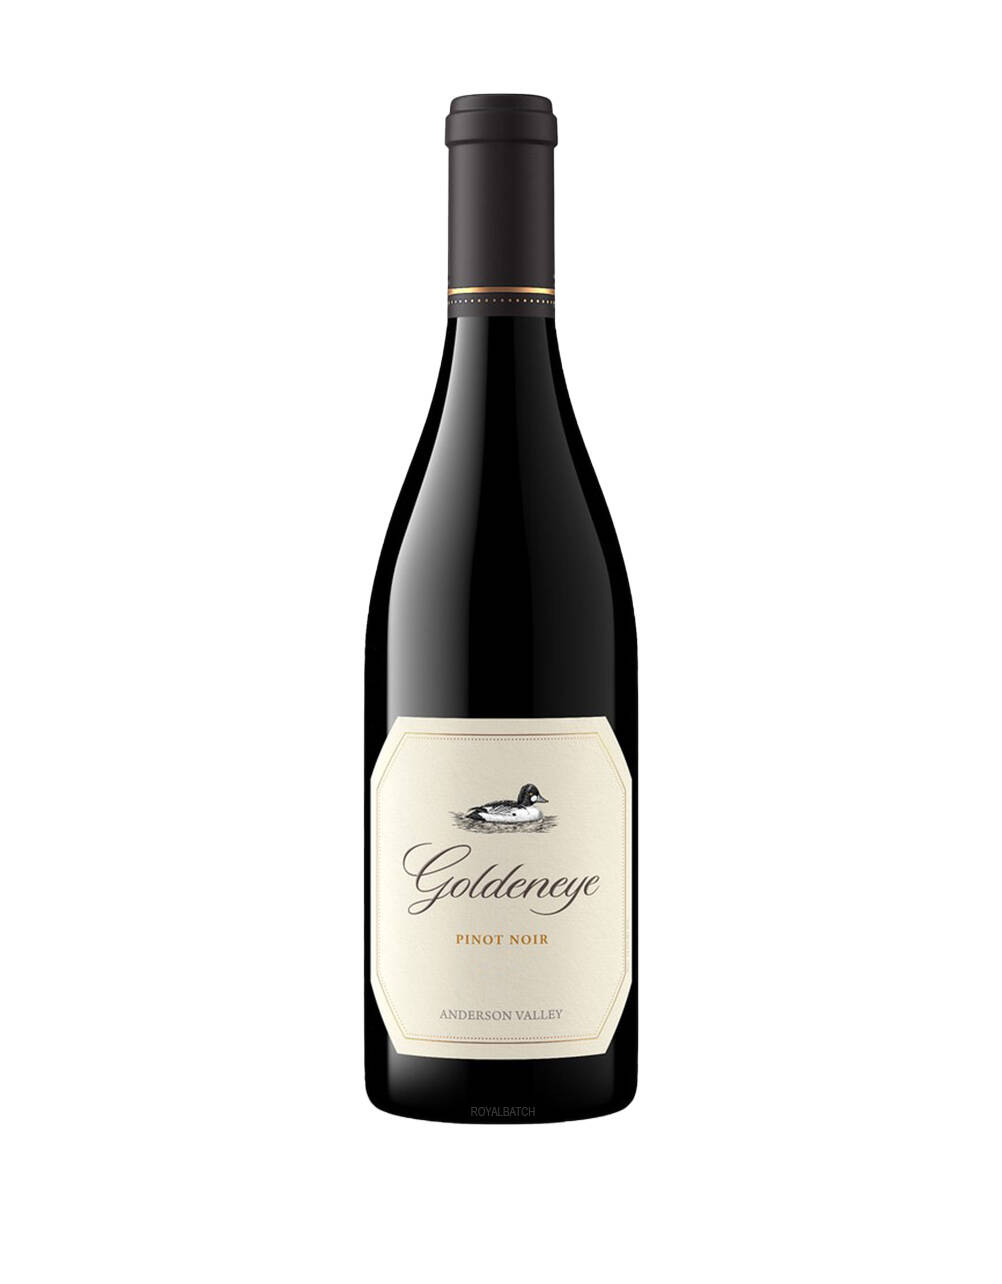 Goldeneye Anderson Valley Pinot Noir 2021 Wine